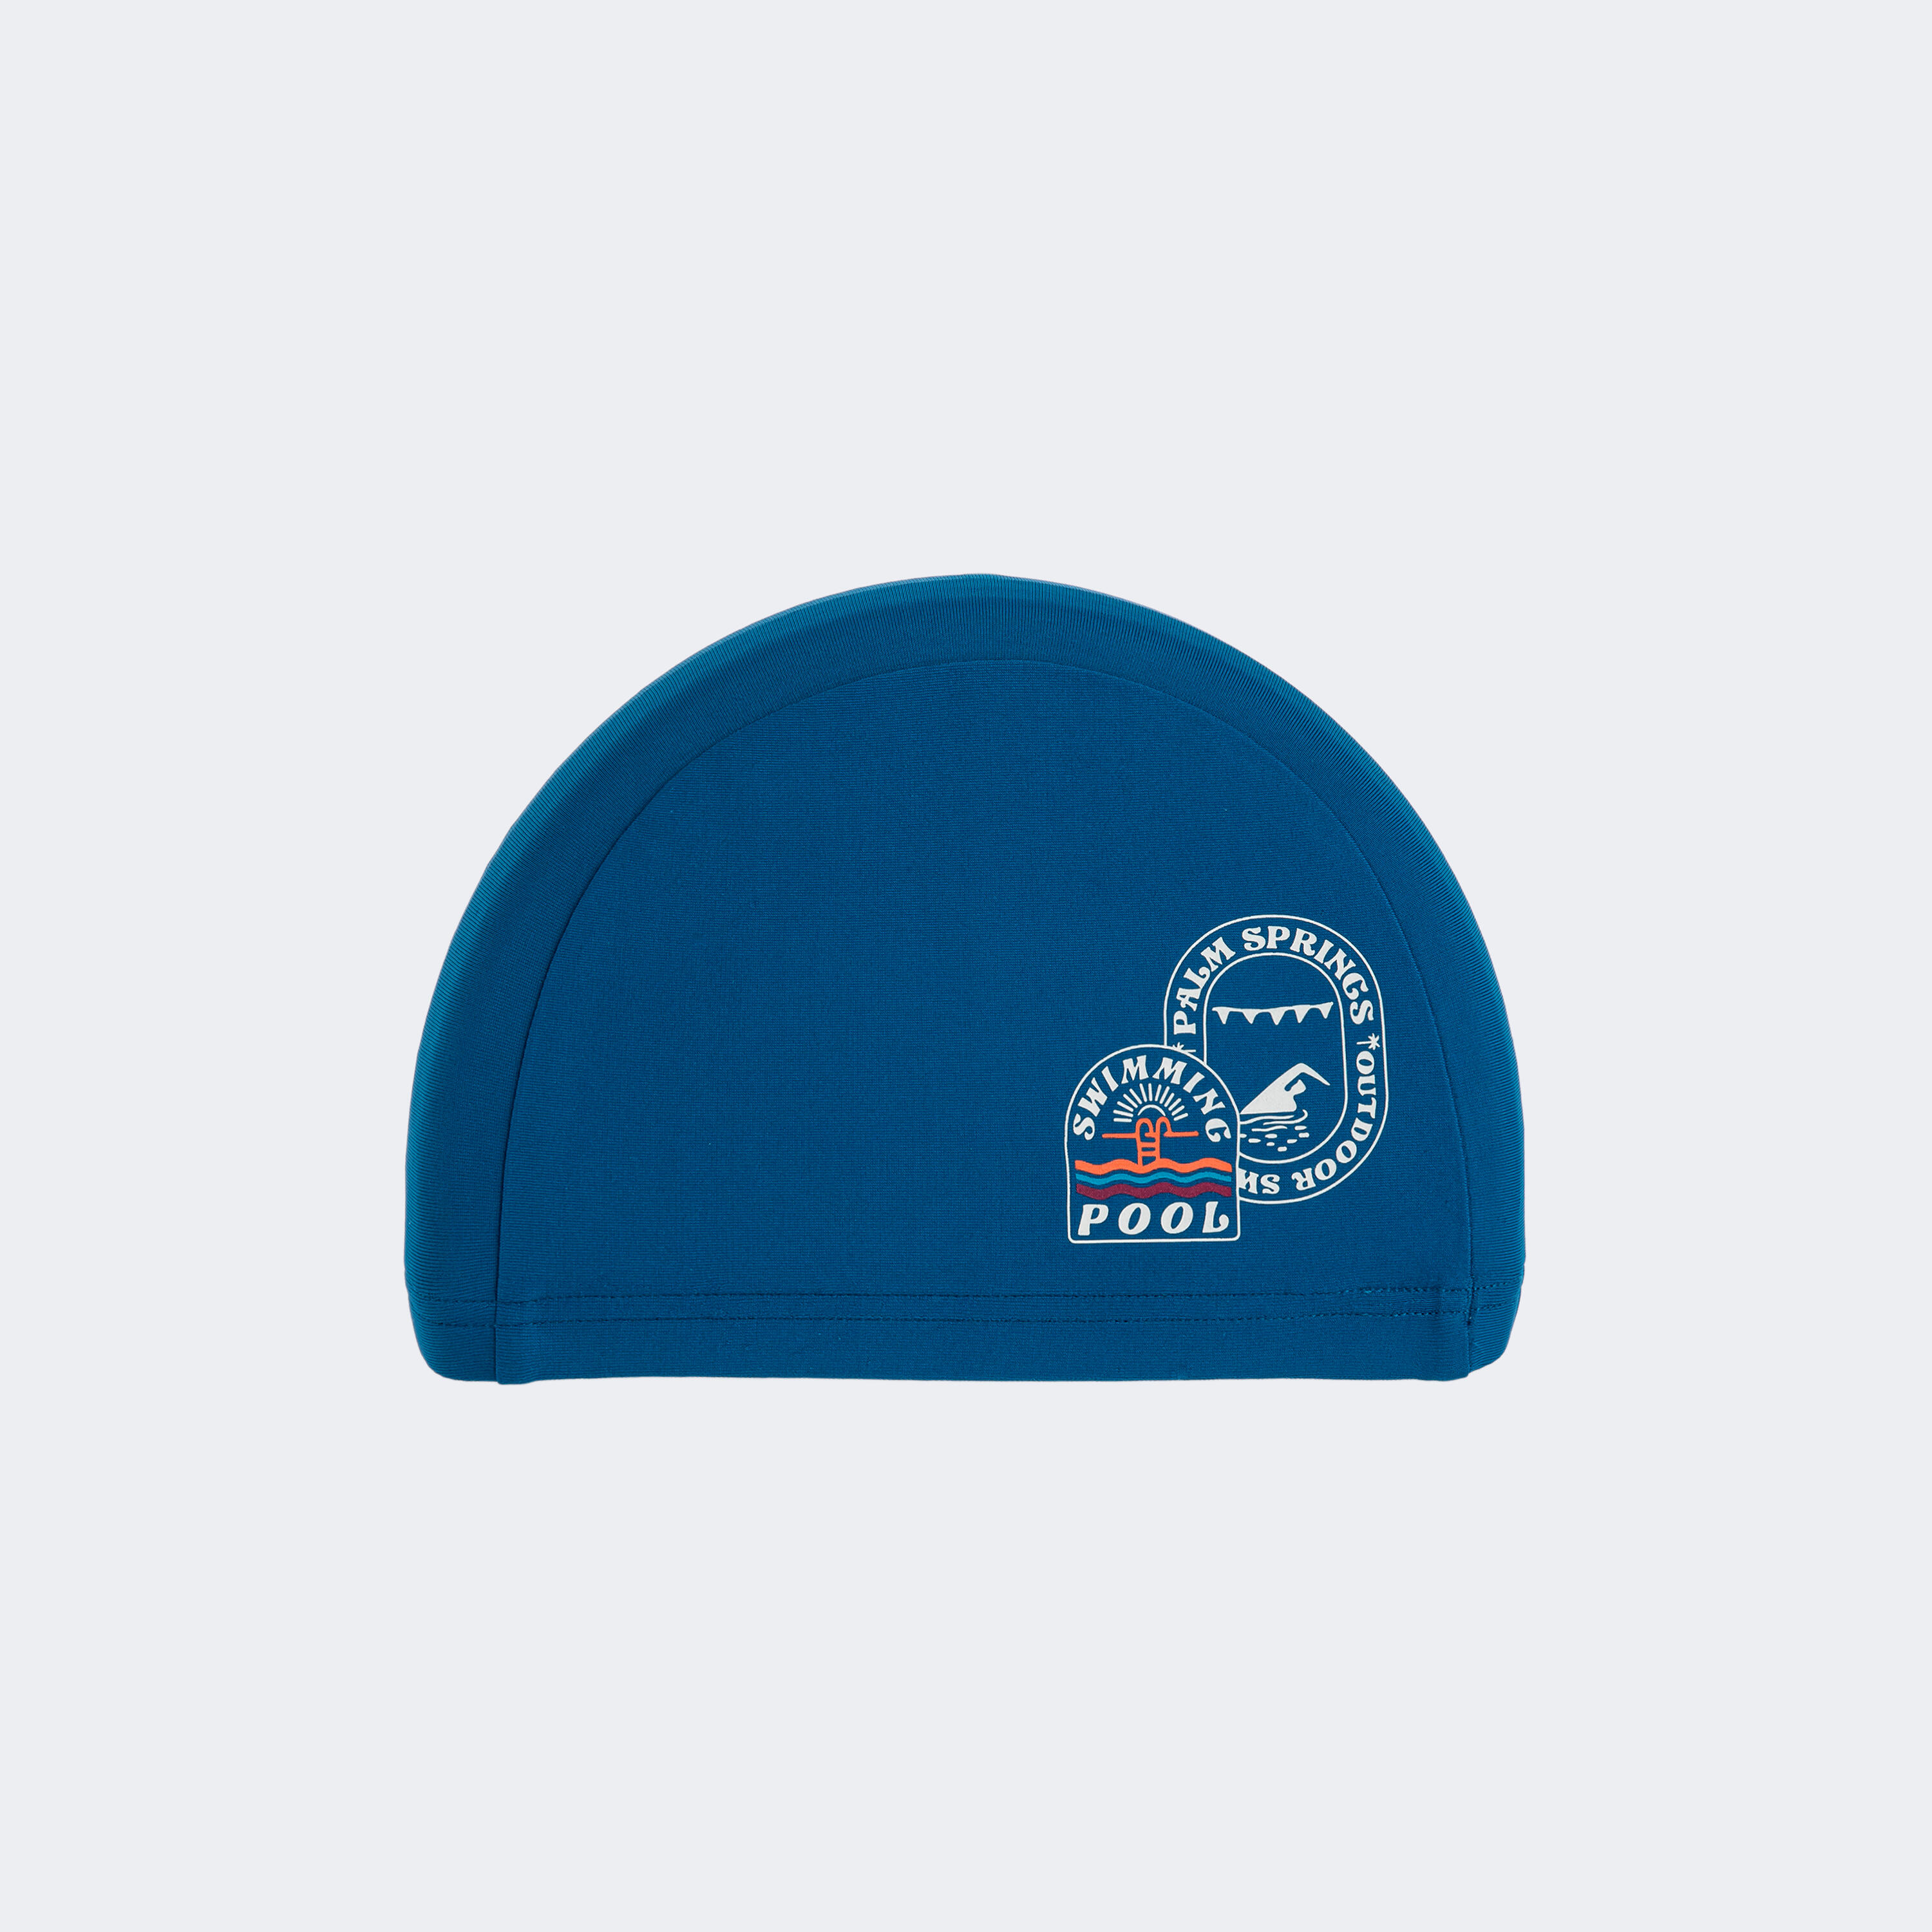 Mesh swim cap - Printed fabric - Size S - Blue patch 1/2